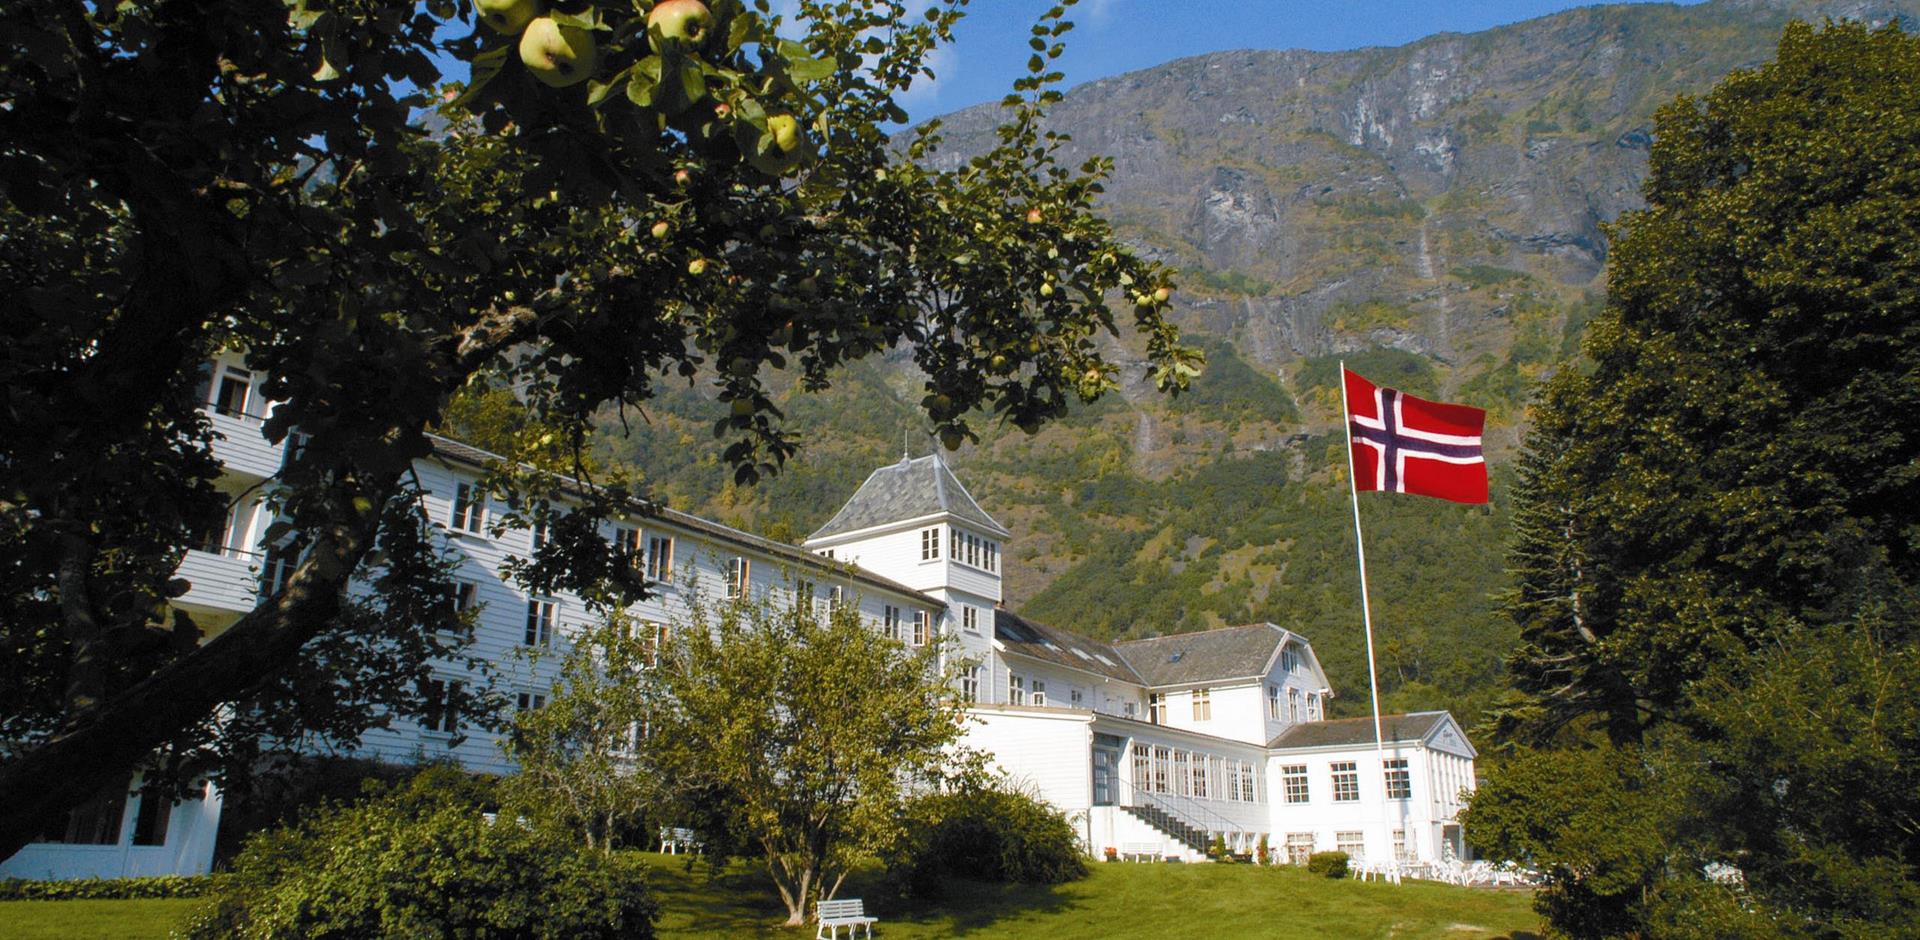 Fretheim Hotel, Norway, A&K